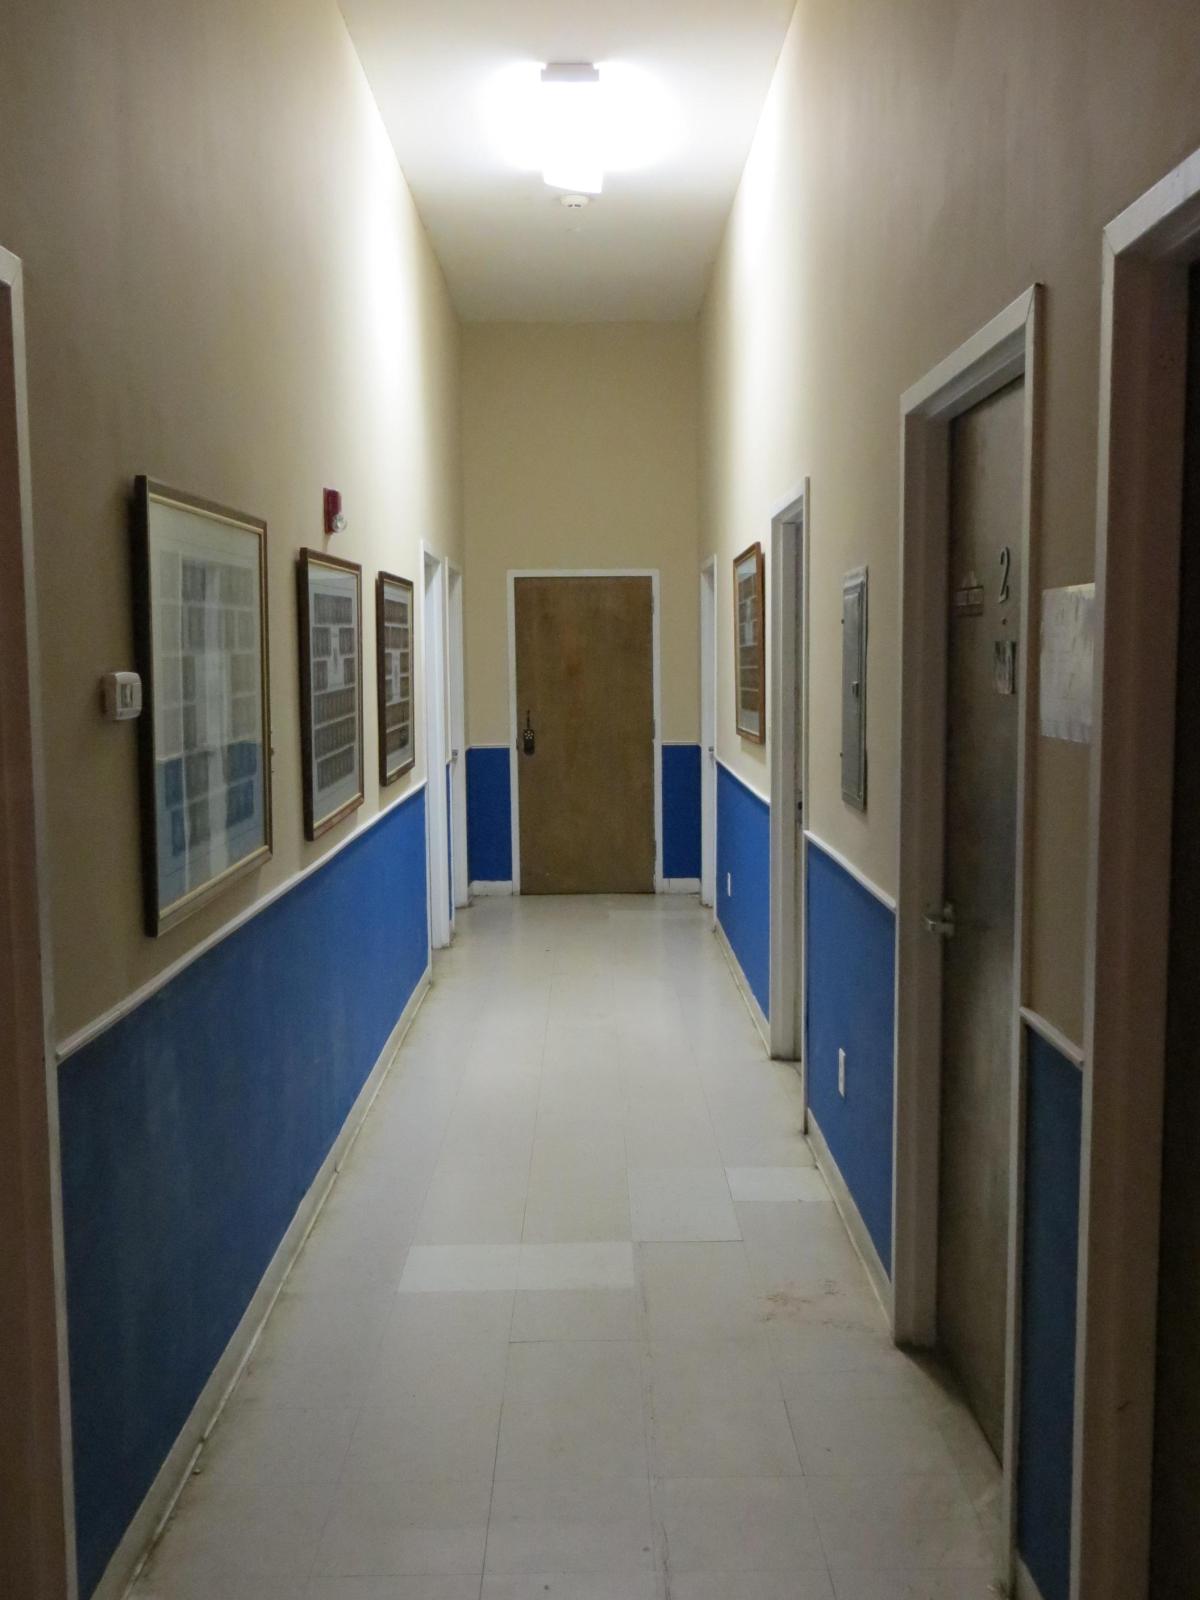 Hallway2.jpg